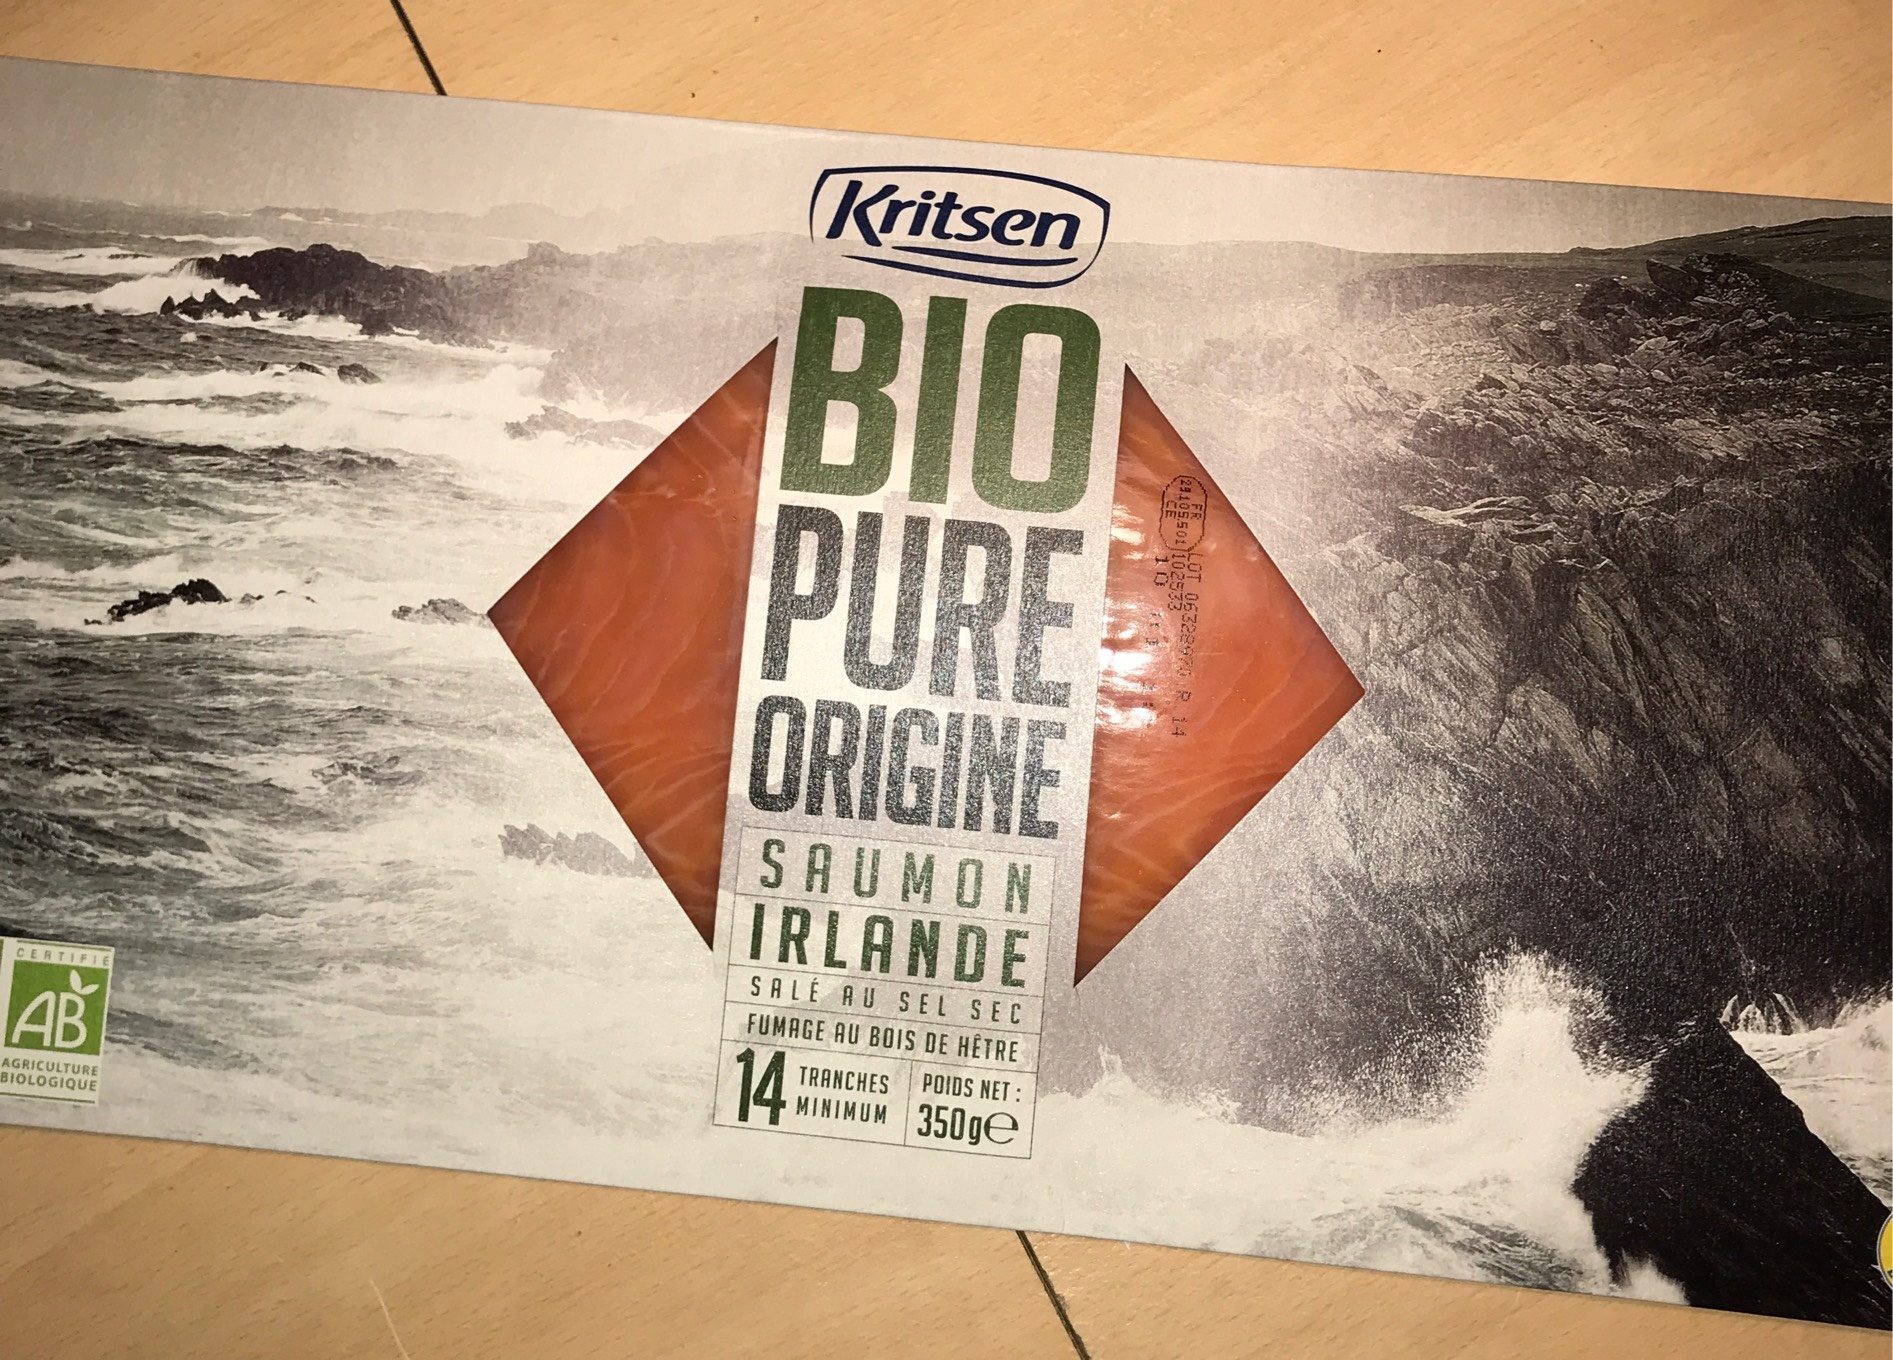 Saumon Irlande Bio Pure Origine - Producto - fr